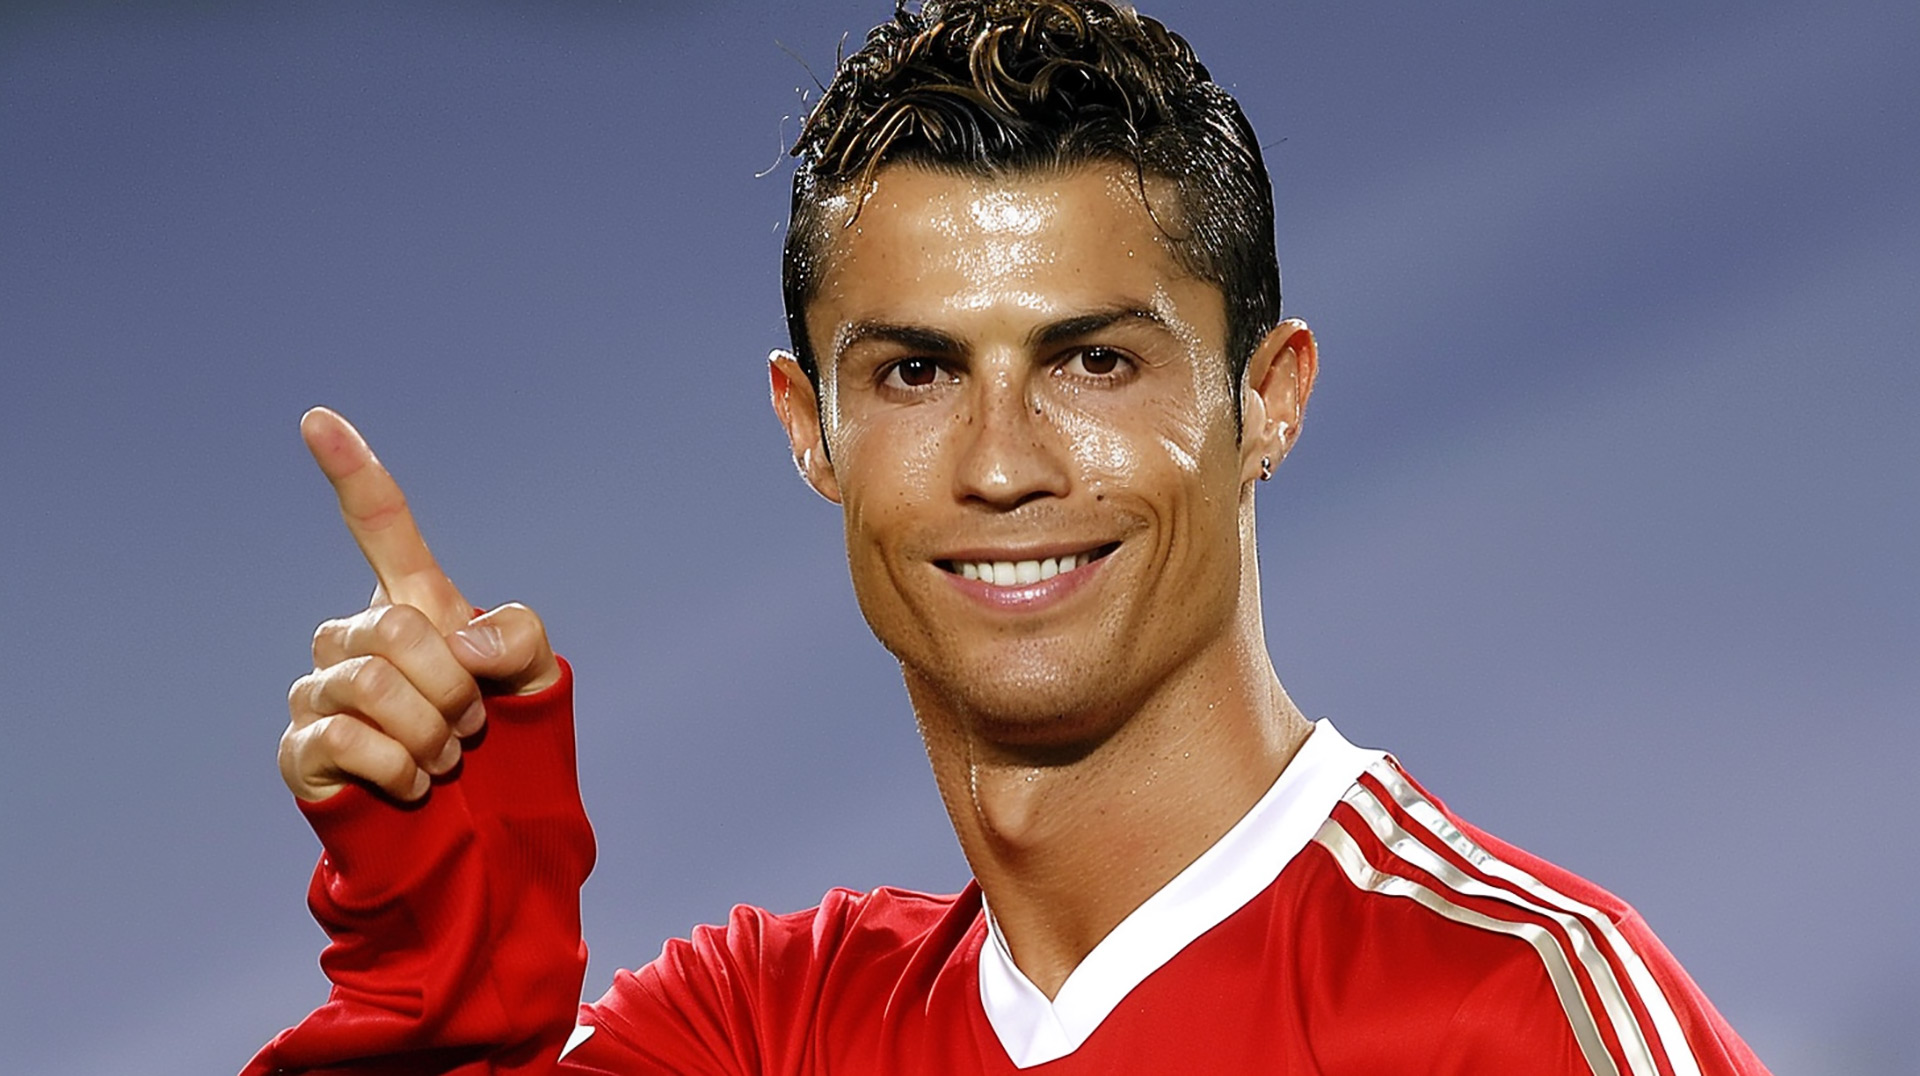 4K Cool Ronaldo Image: Perfect for Desktop